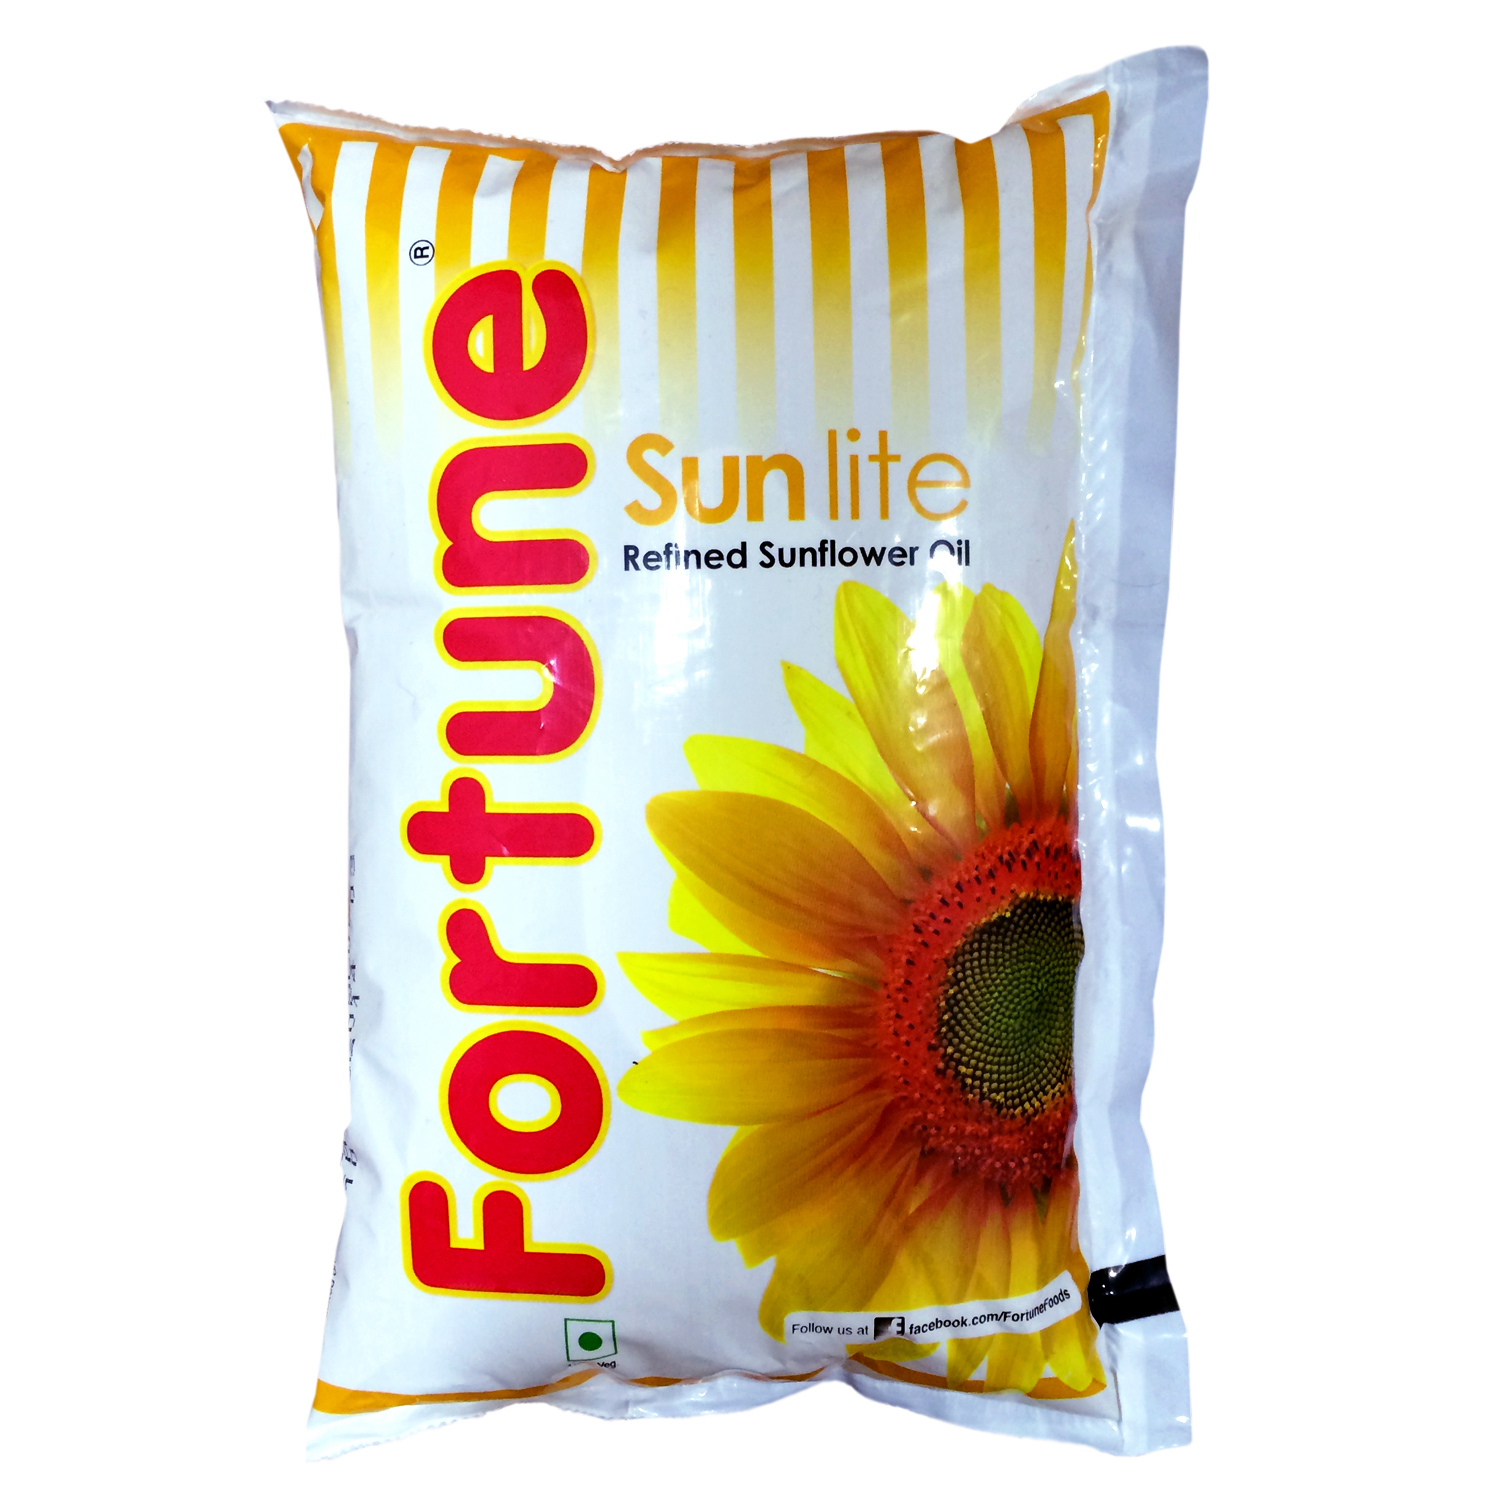 Fortune sunflower oil-sunlite pouch